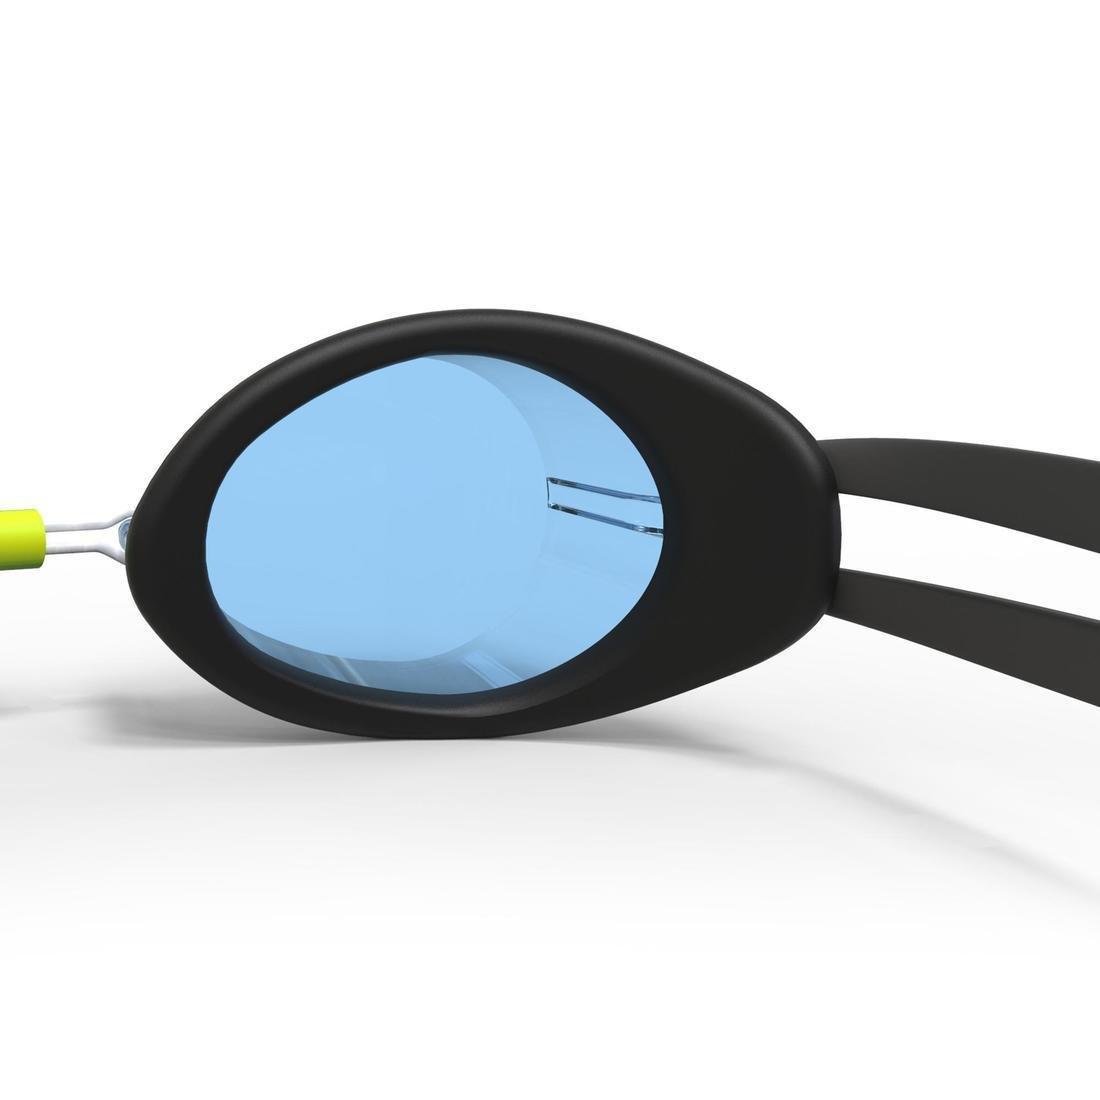 NABAIJI - Swedish Swimming Goggles 900, Black Yellow Clear Lenses